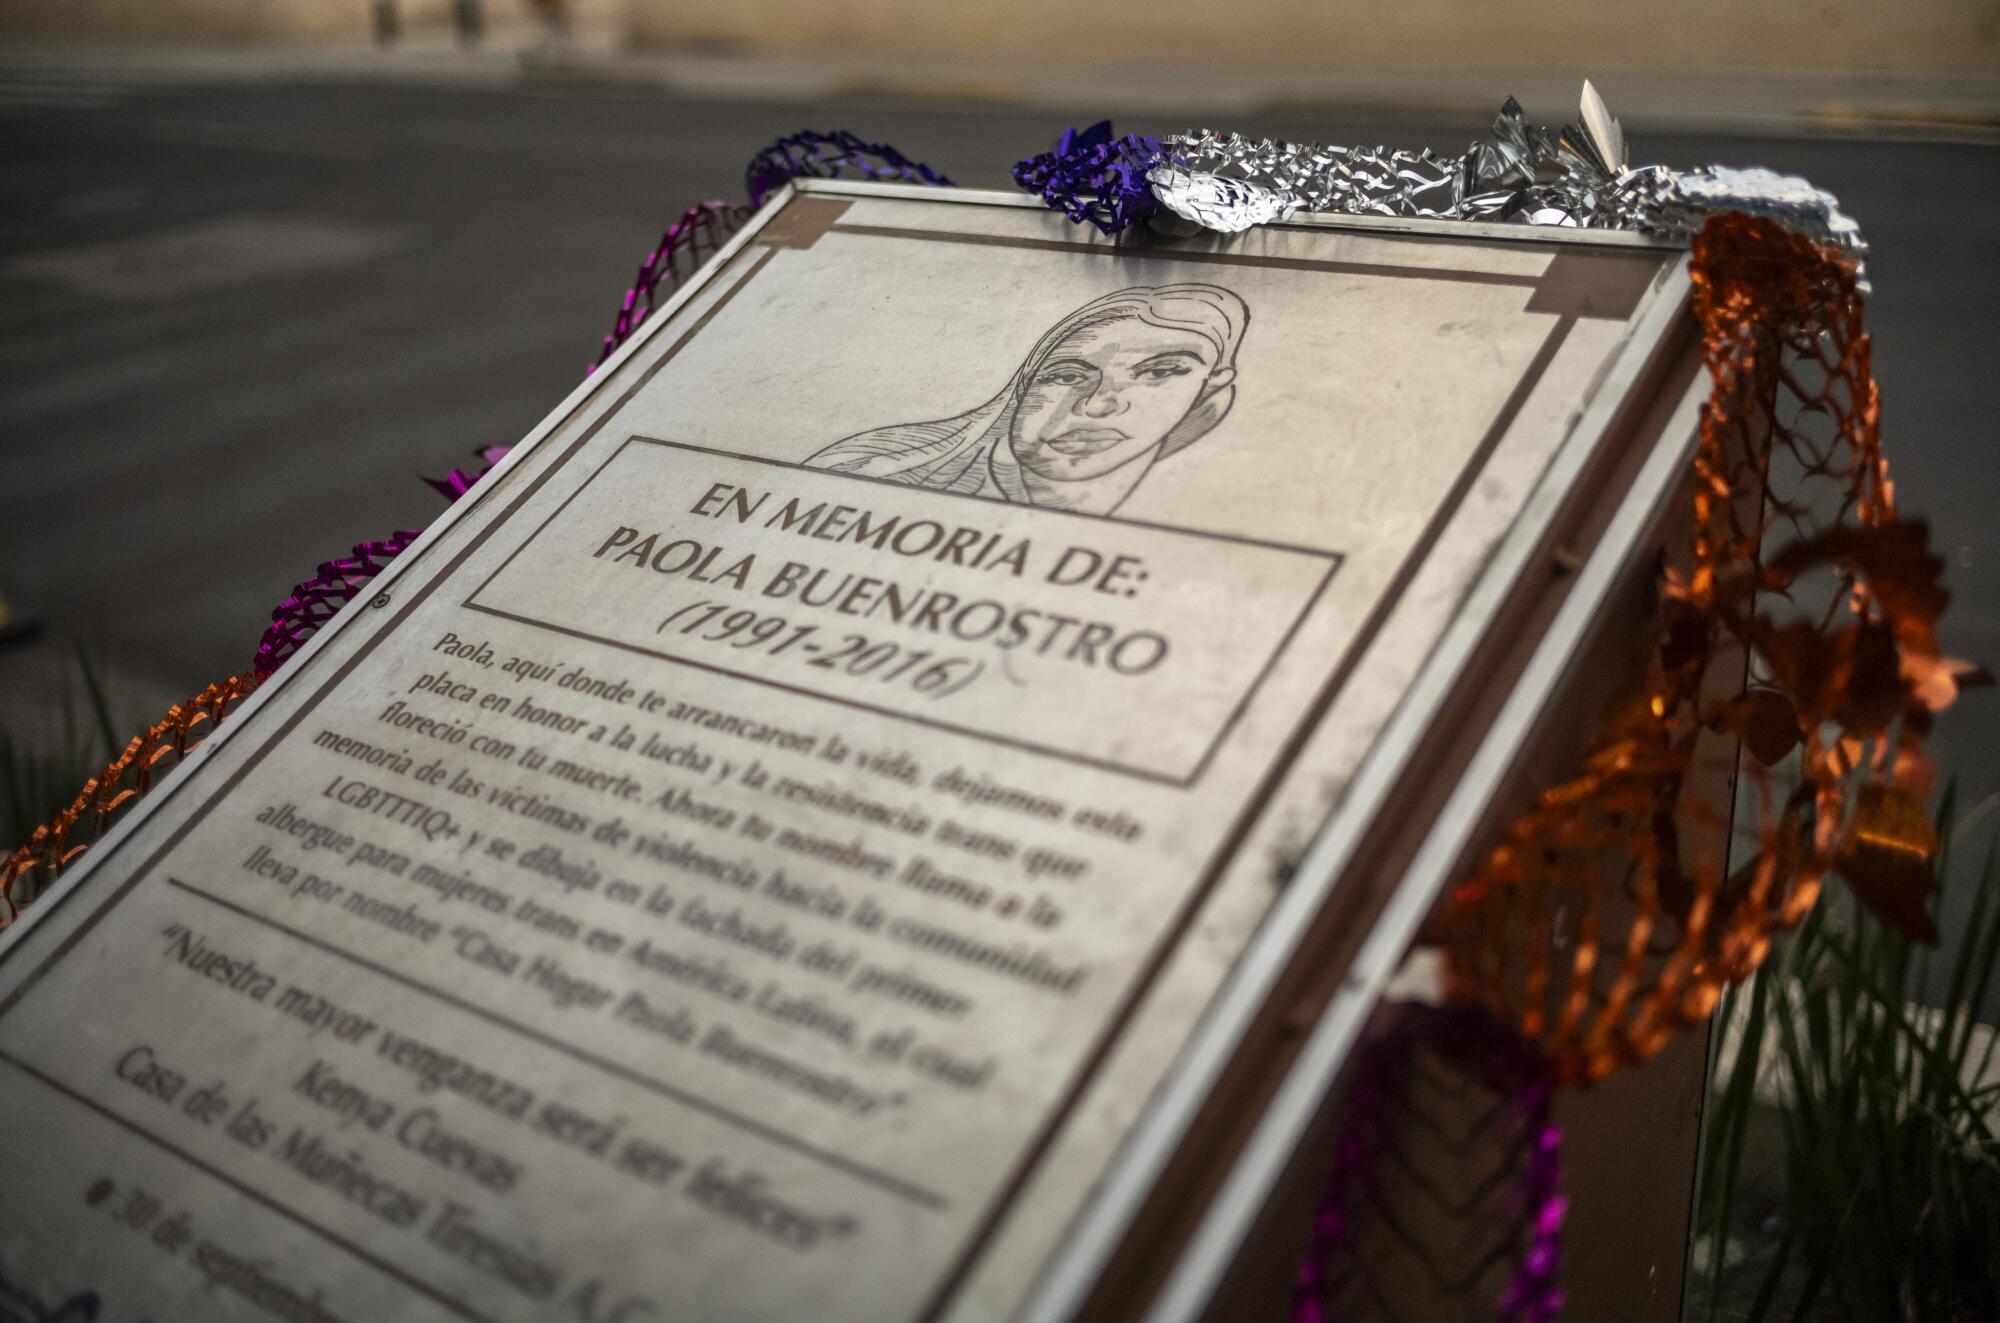 A commemorative plaque in memory of Paola Buenrostro